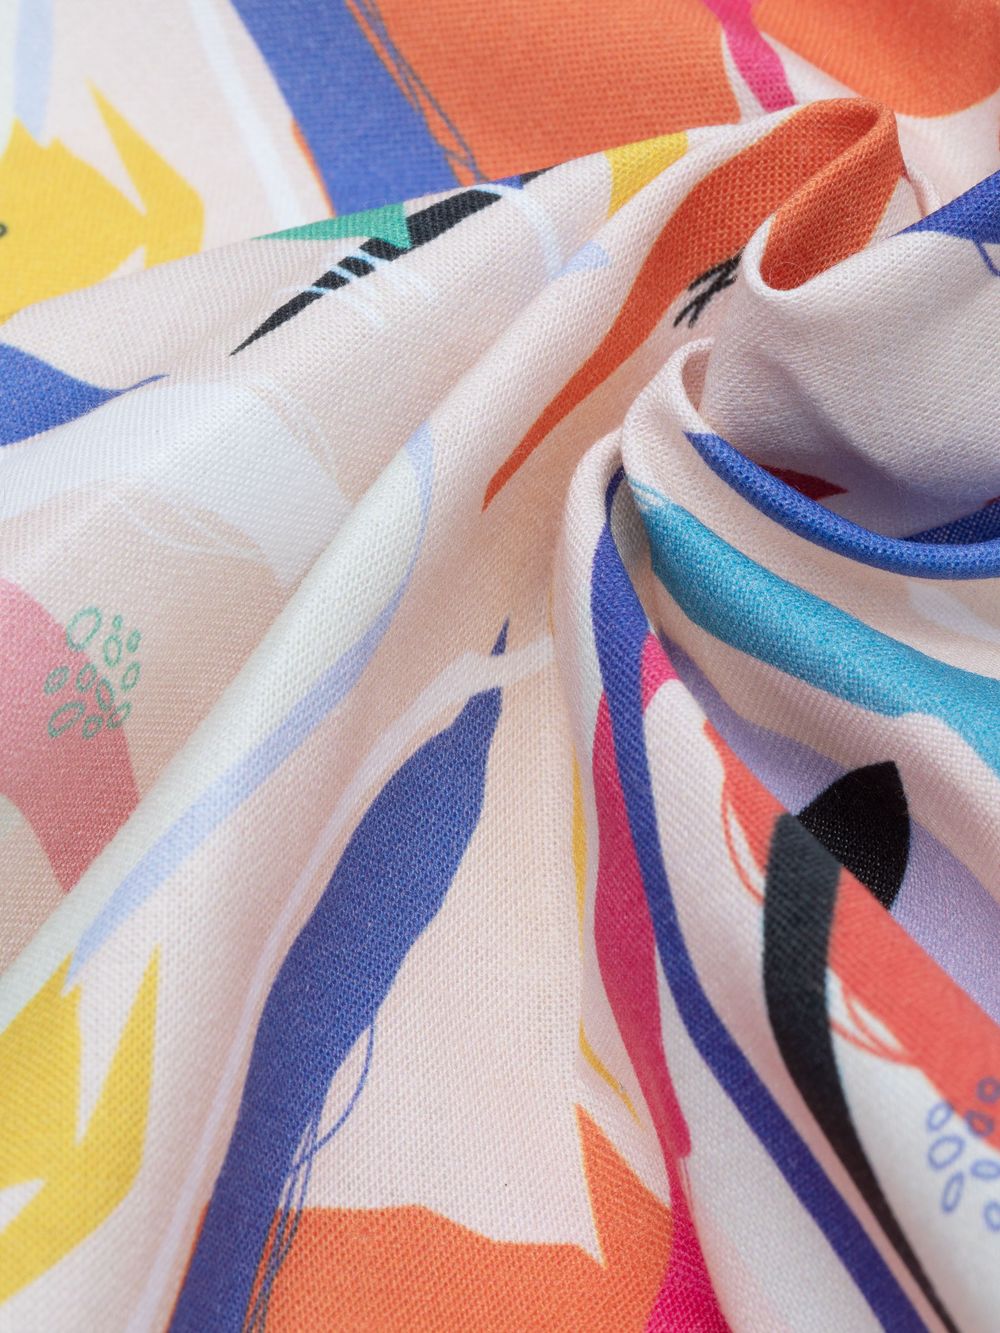 Printed Calico Fabric UK. Custom Printed Cotton Calico Fabric